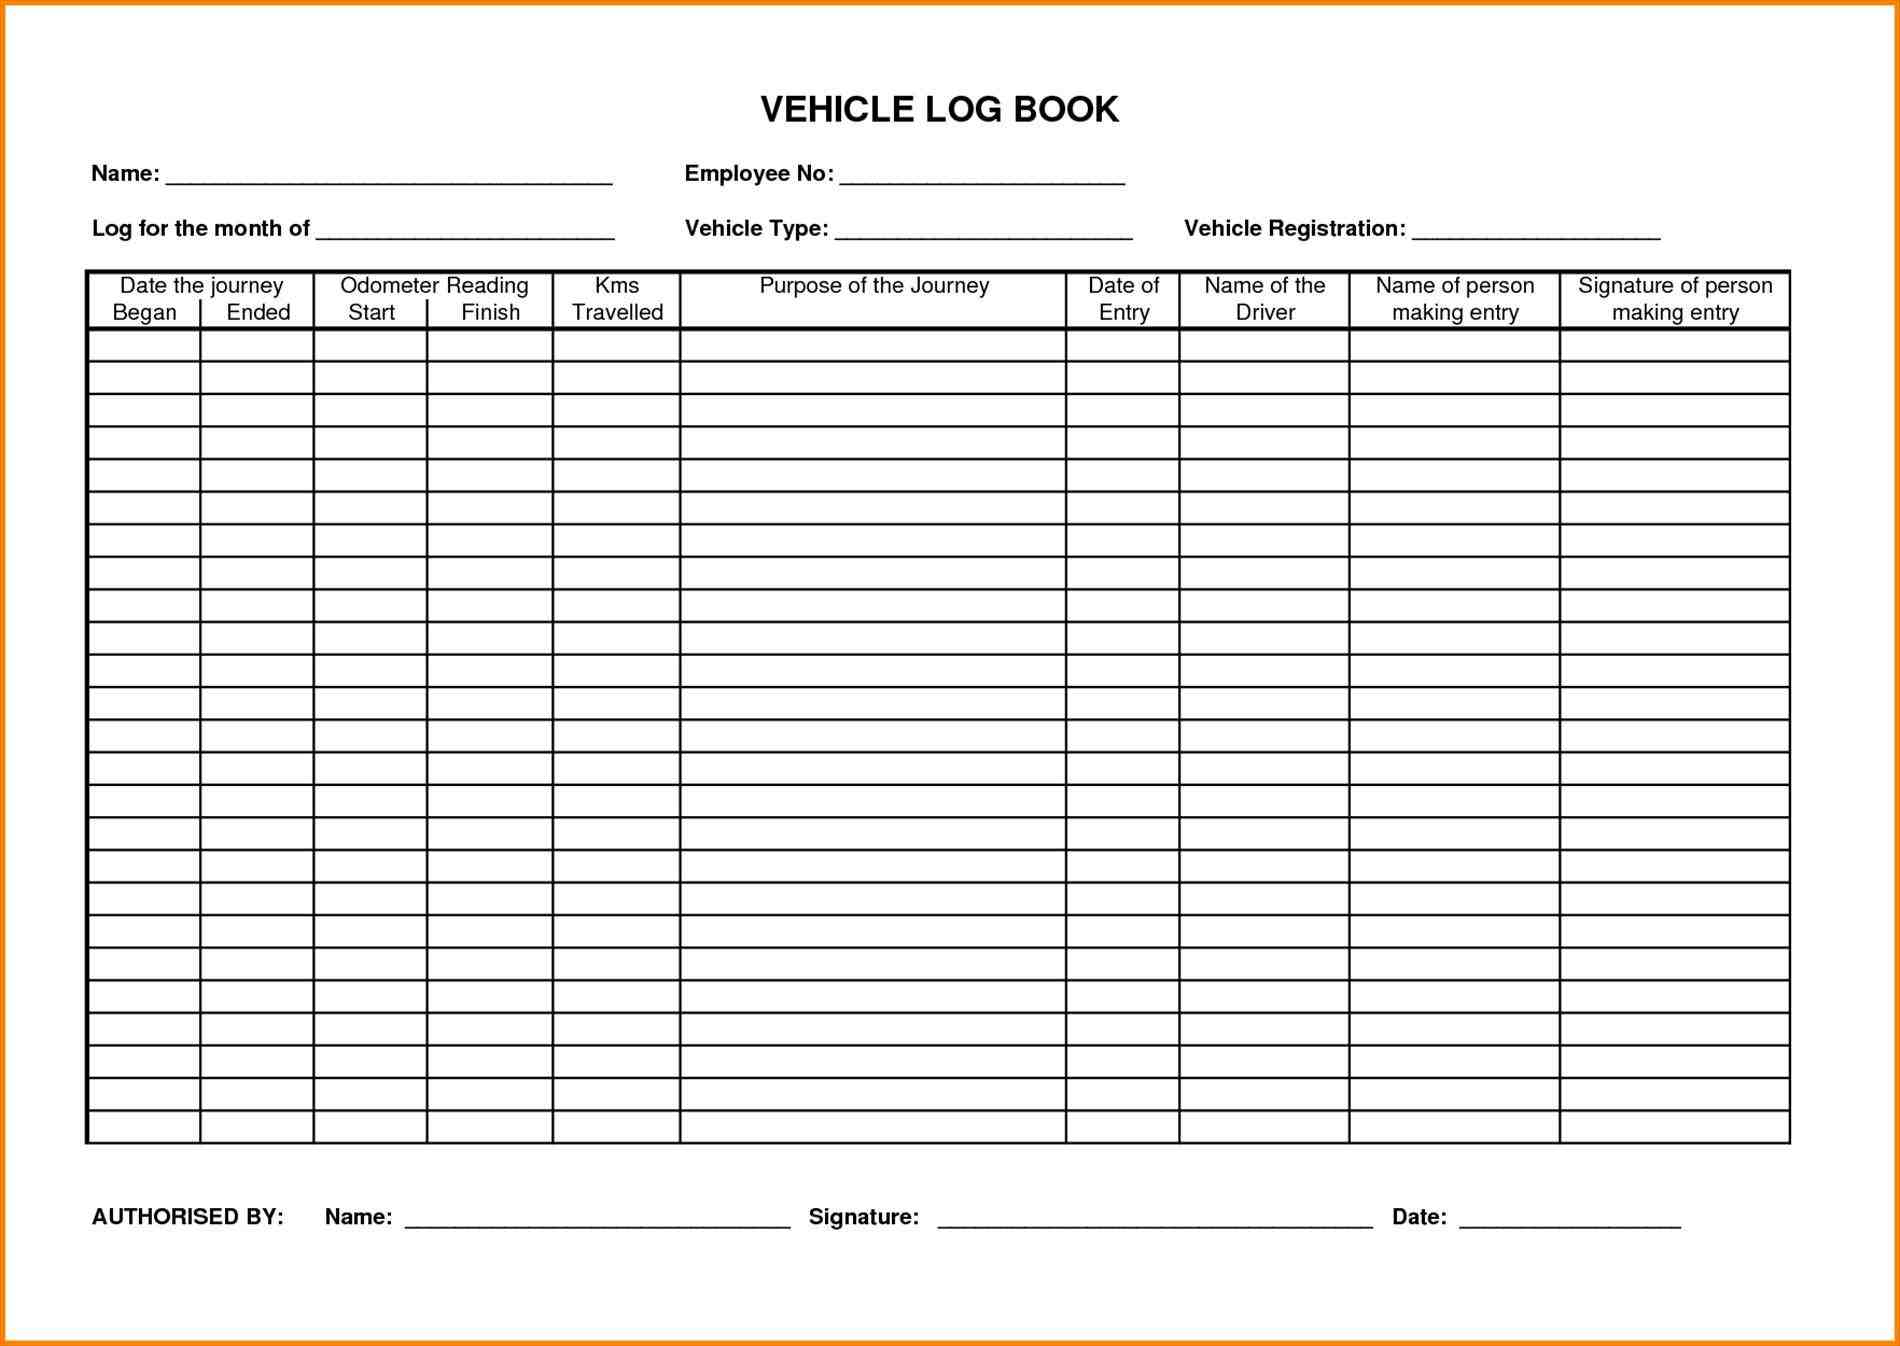 145-surprising-vehicle-log-book-template-template-ideas